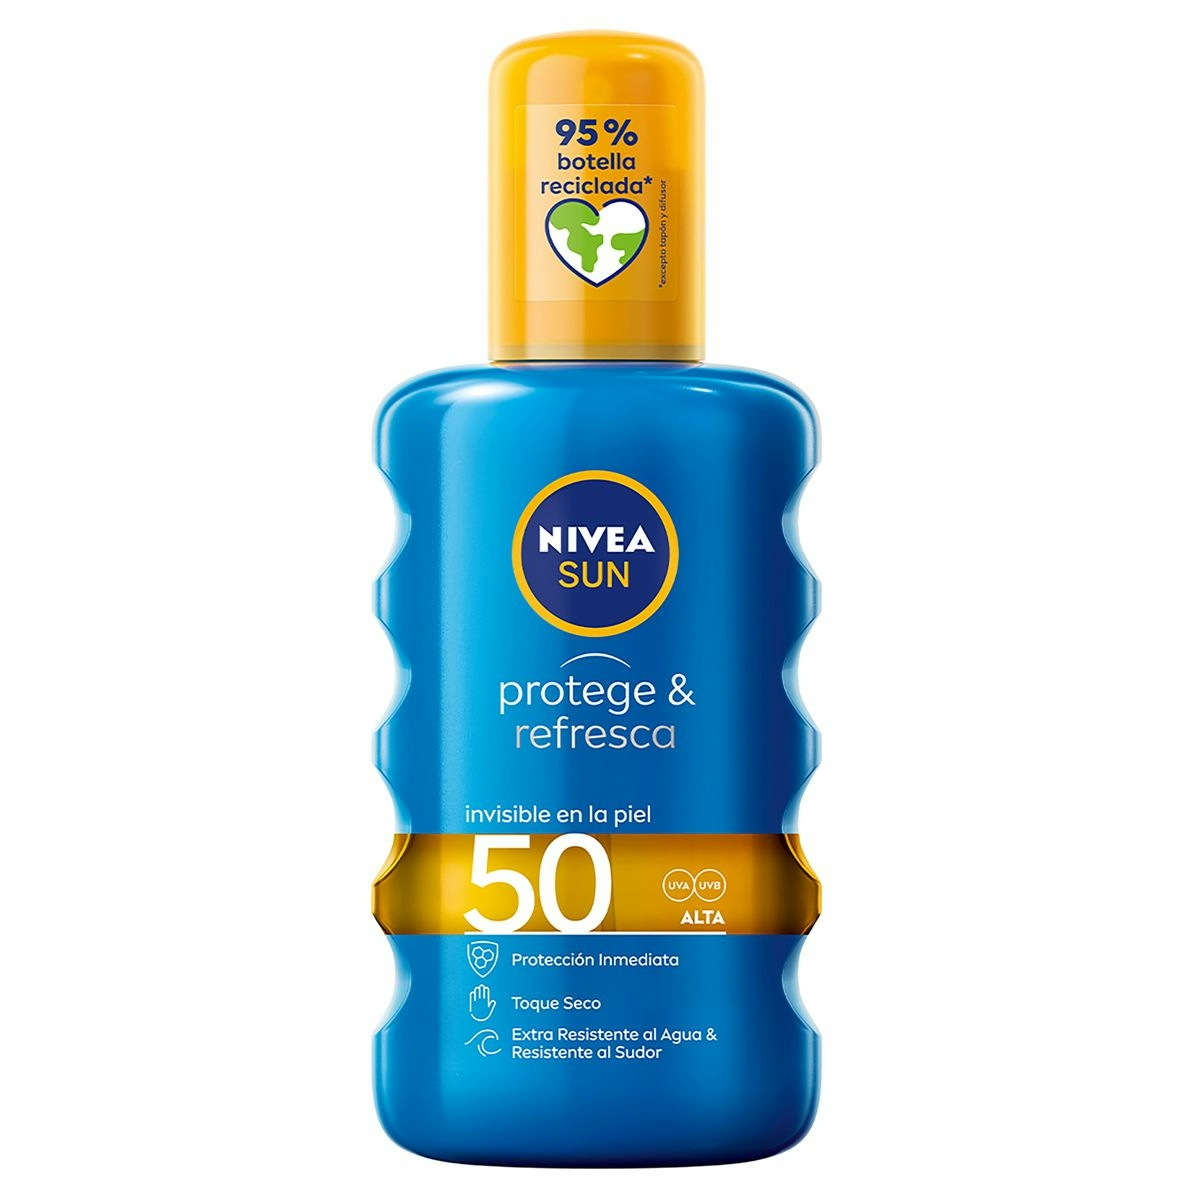 Protector invisible NIVEA protege&refresca sfp 50 spray 200 ml